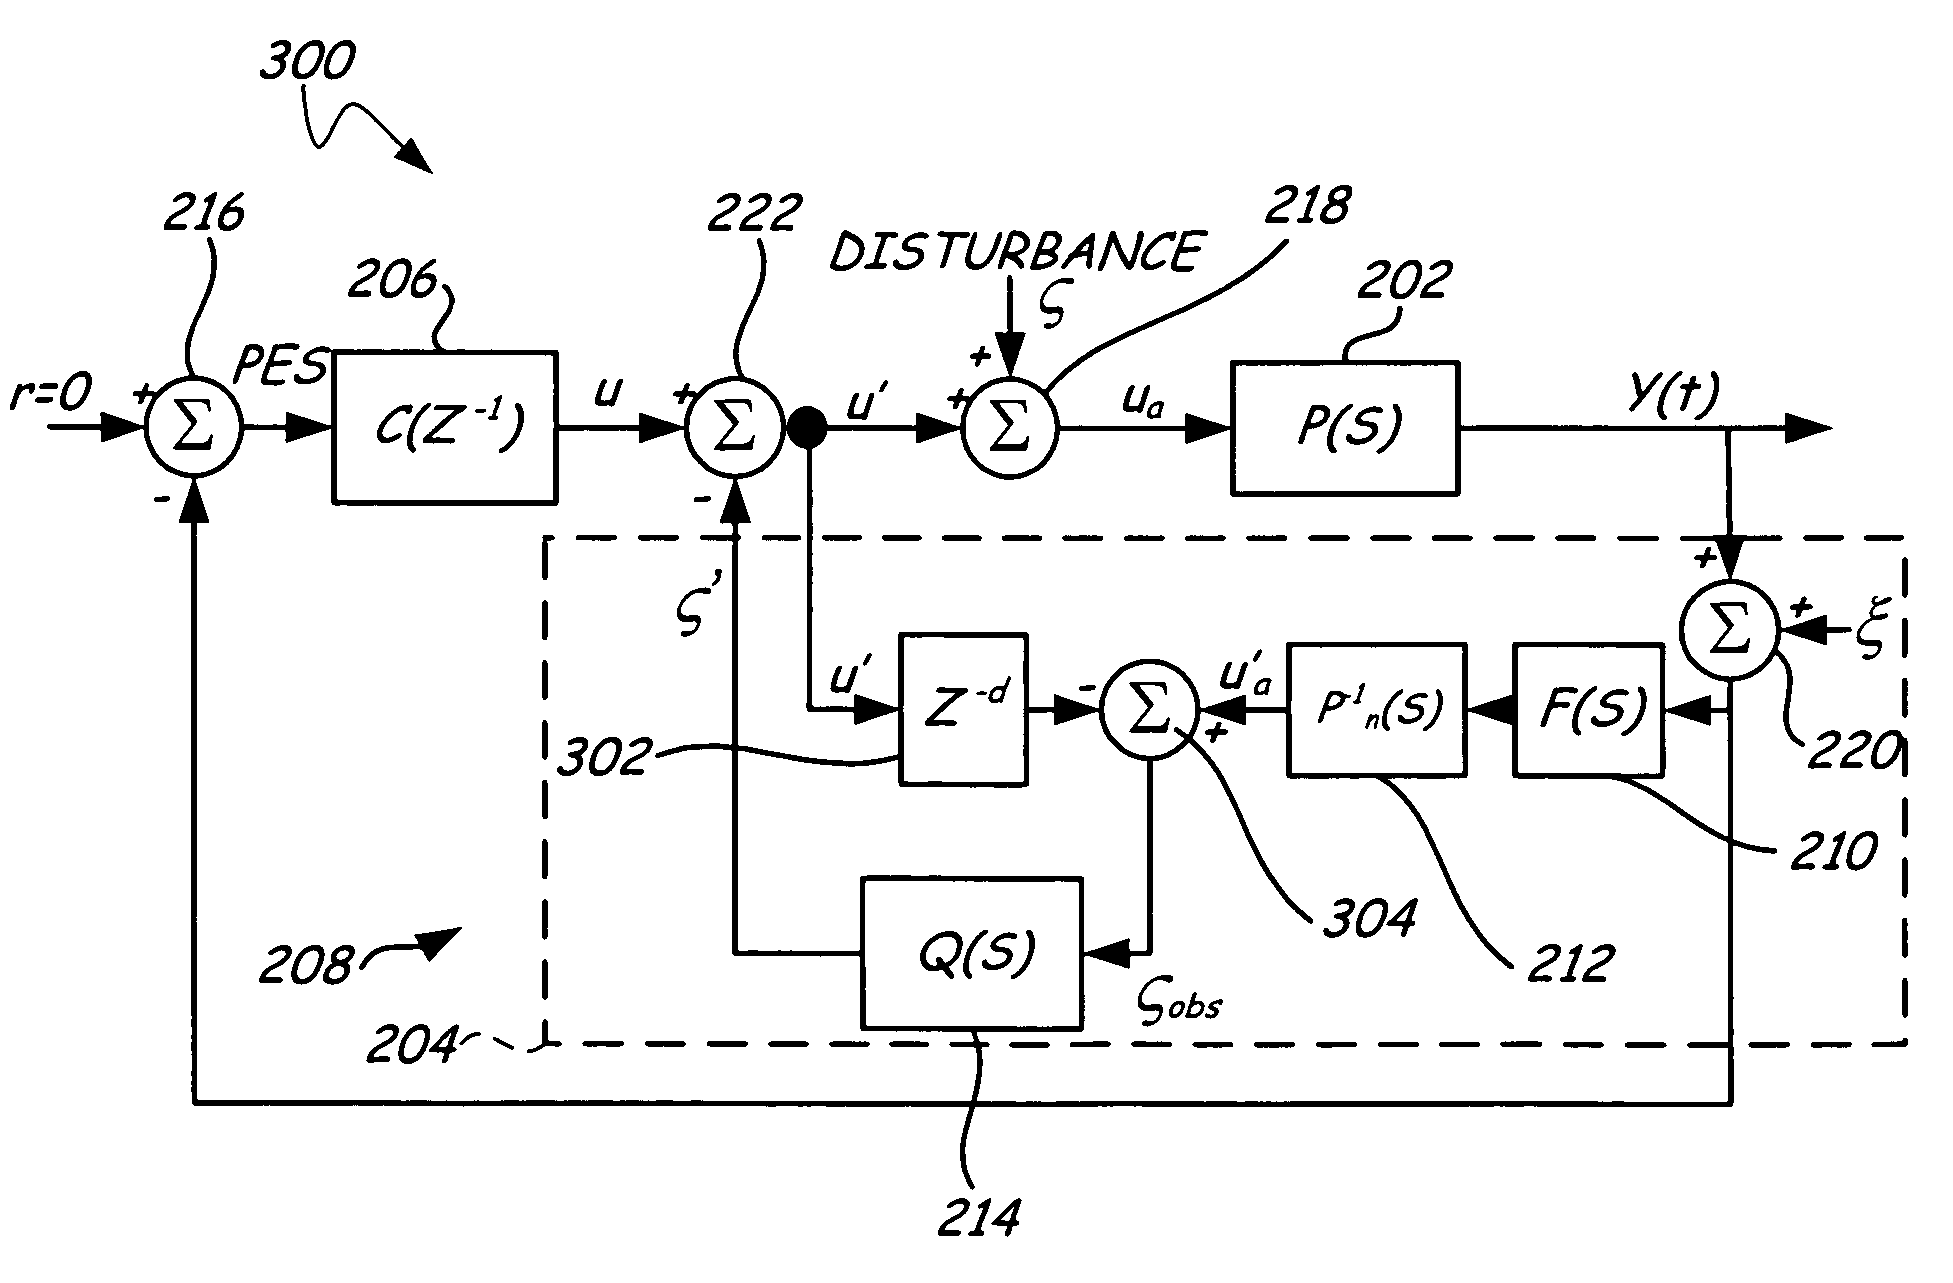 Random vibration and shock compensator using a disturbance observer